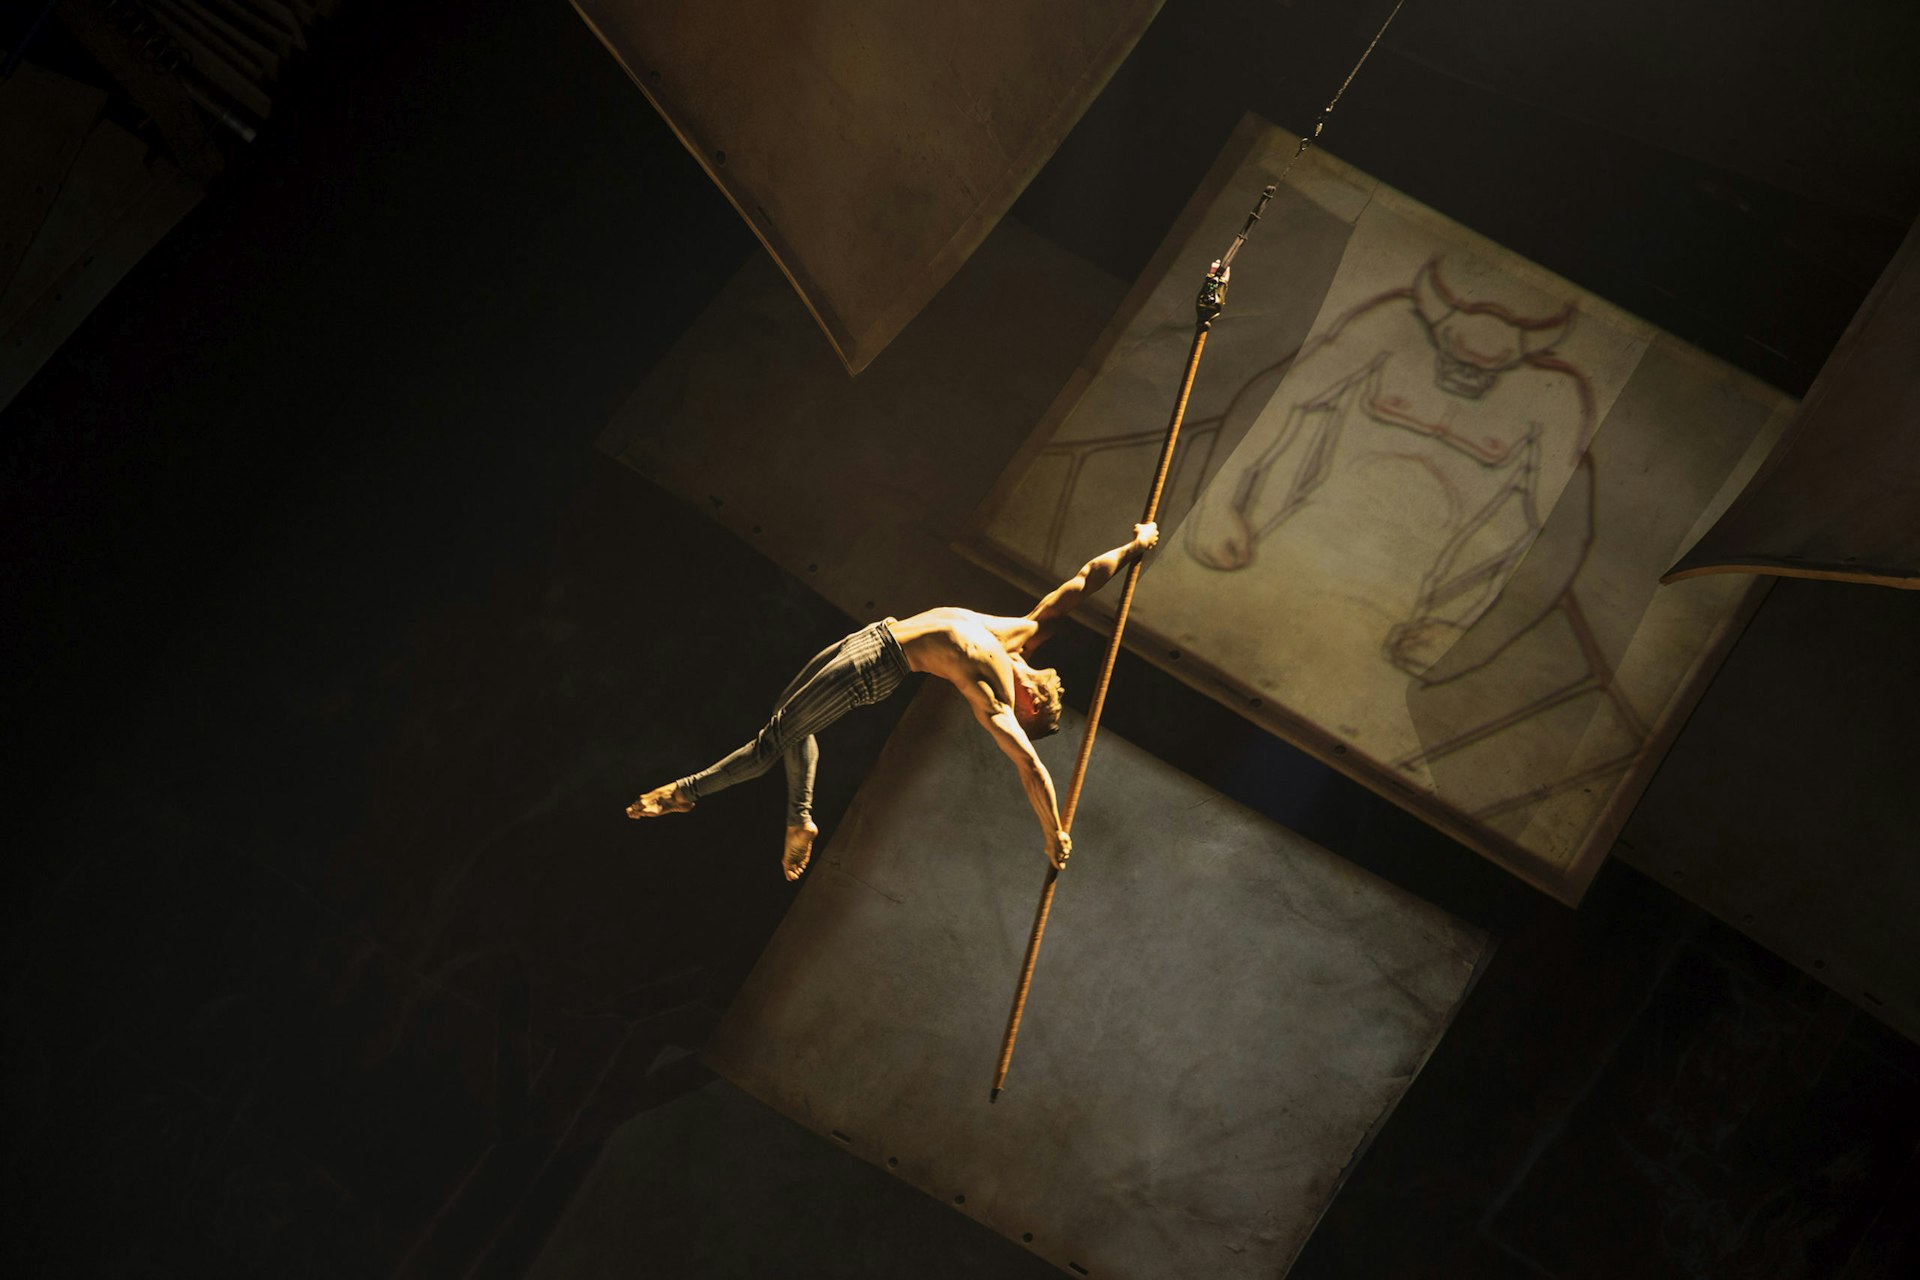 A Cirque du Soleil aerial performer on stage